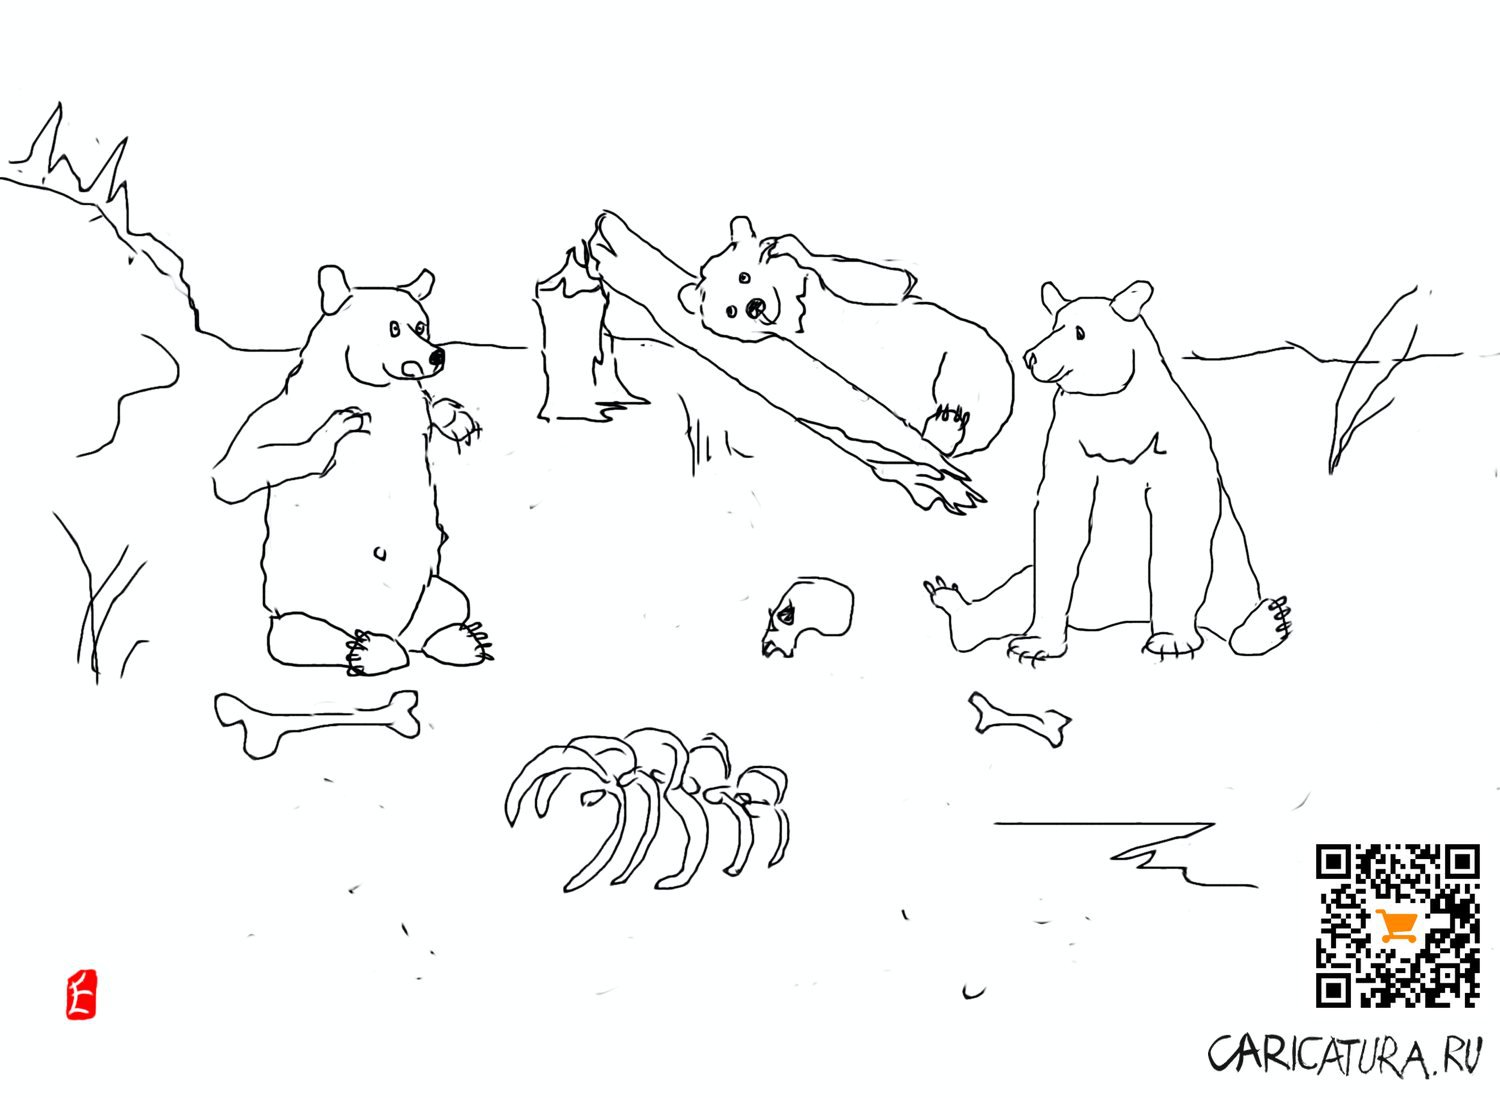 Карикатура "На привале", Евгений Лапин